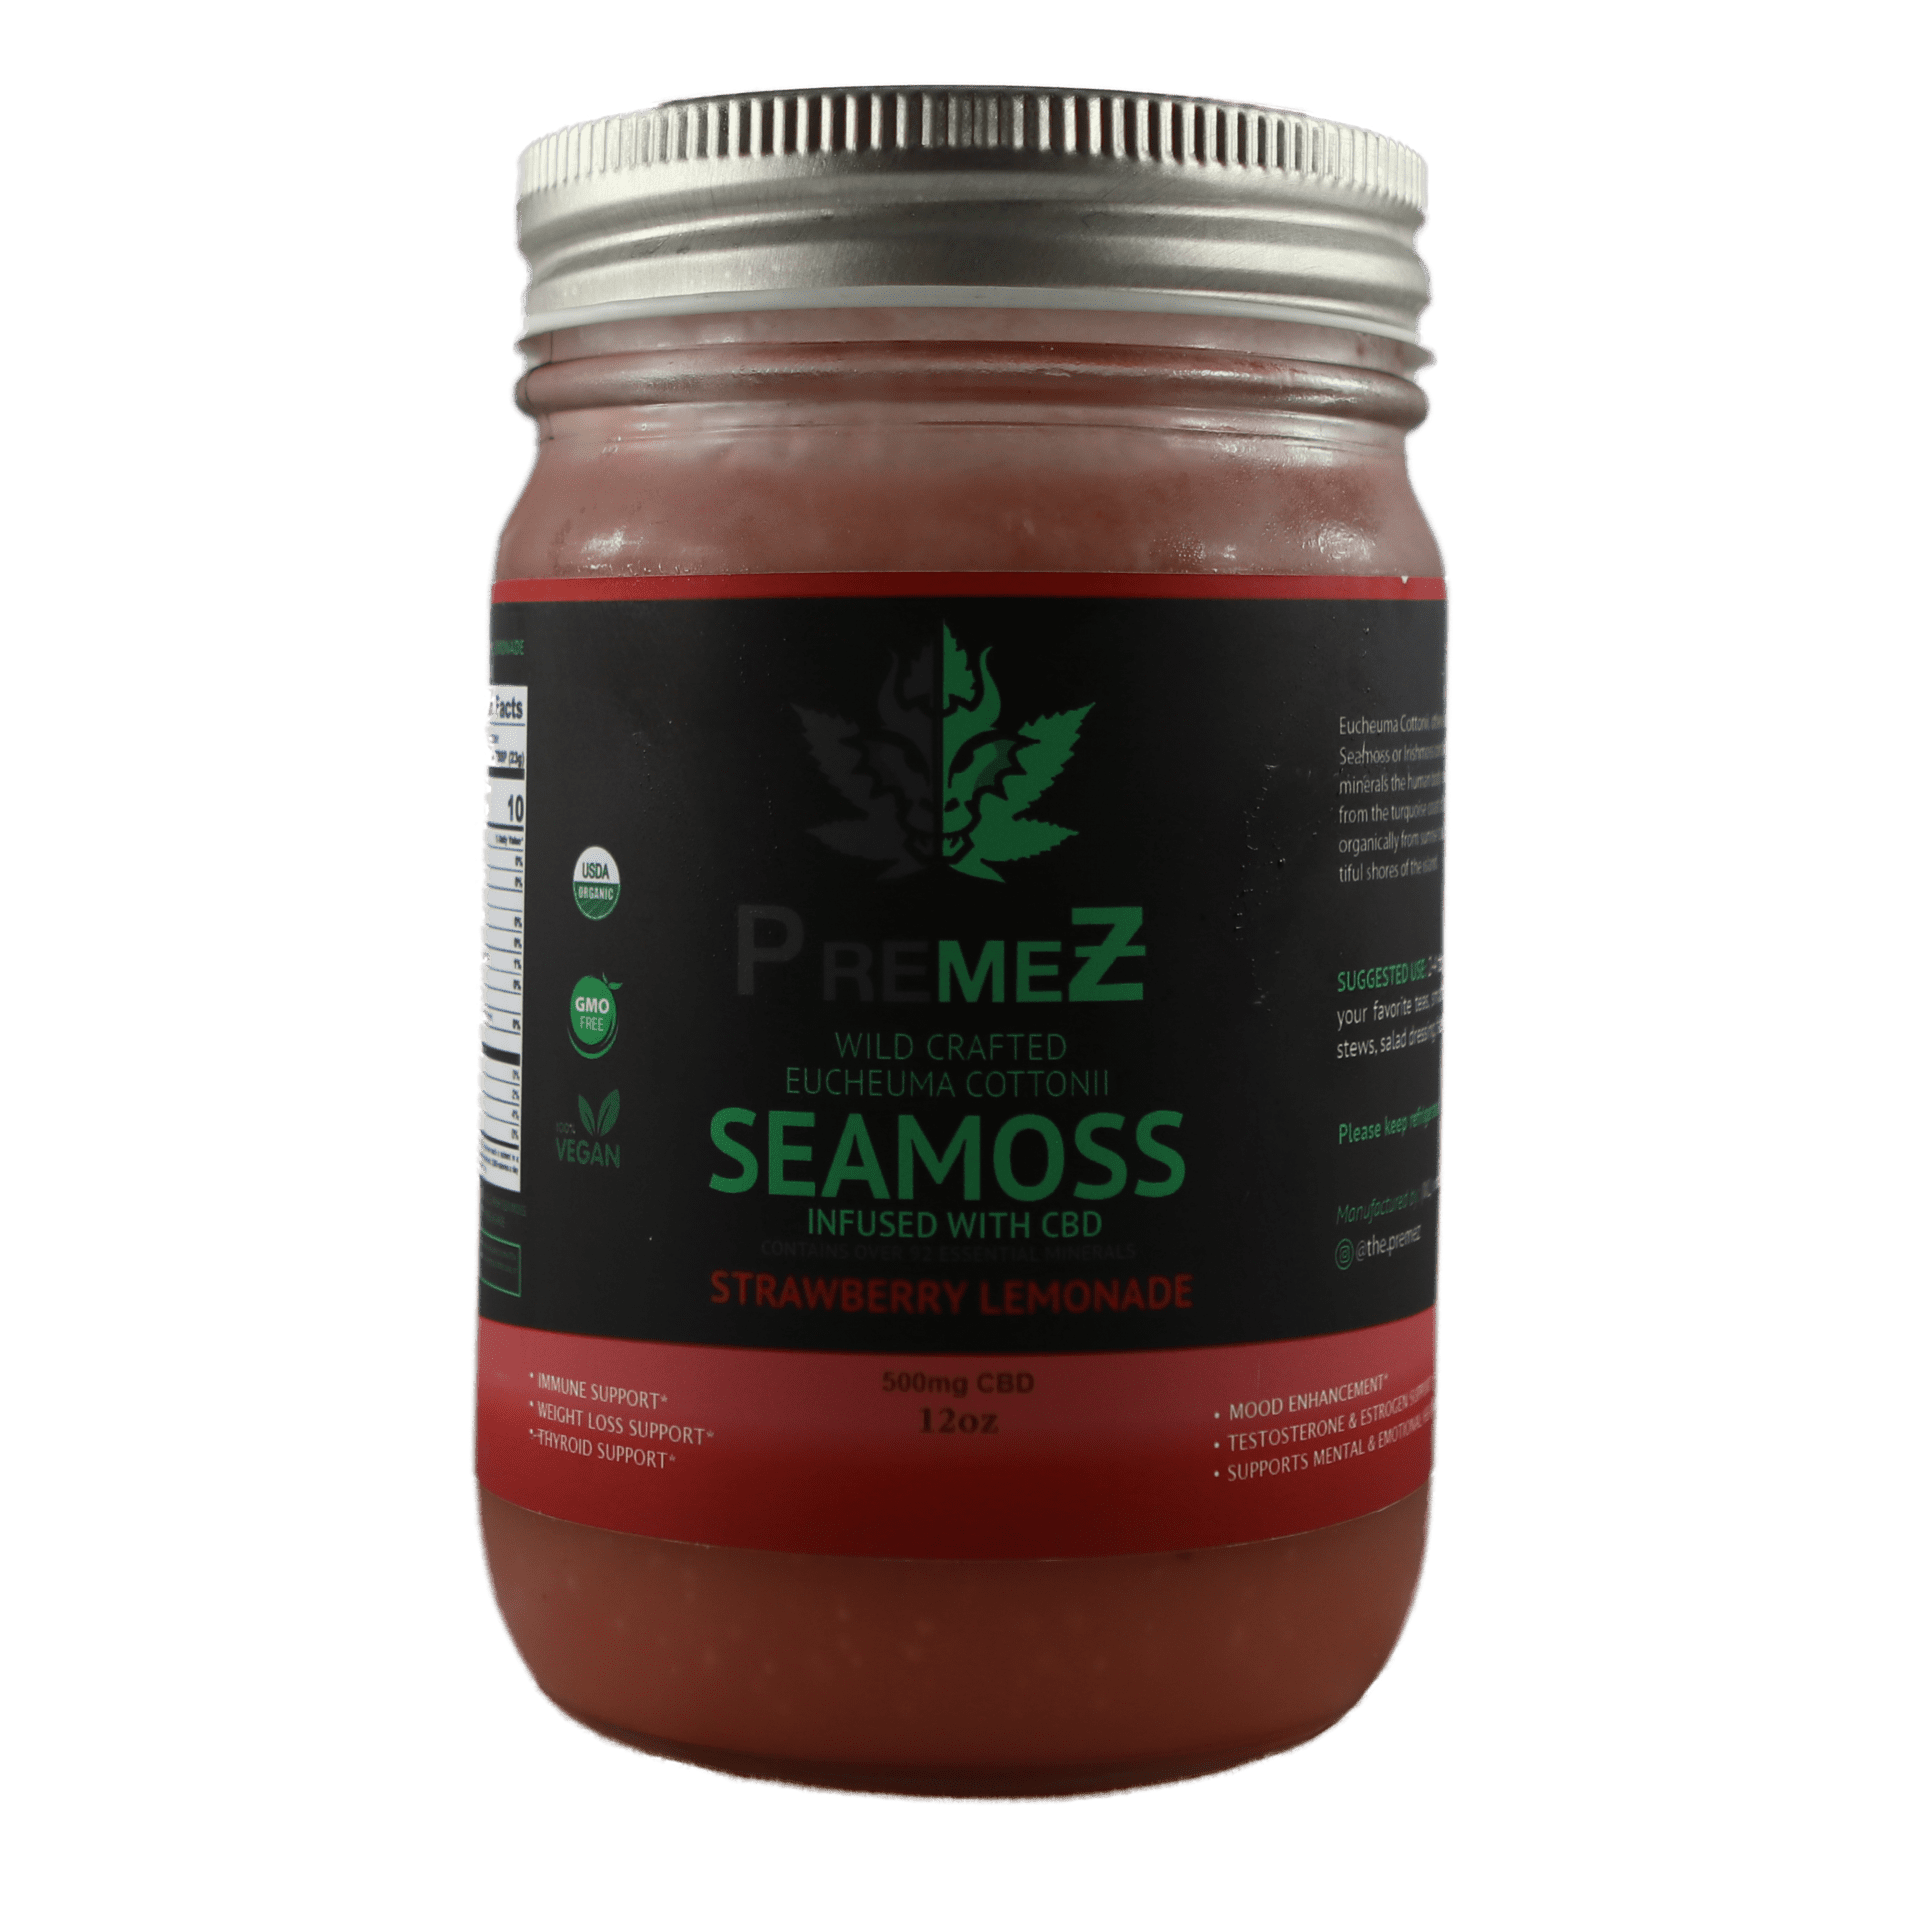 Strawberry-Lemonade-PremeZ-Sea-Moss